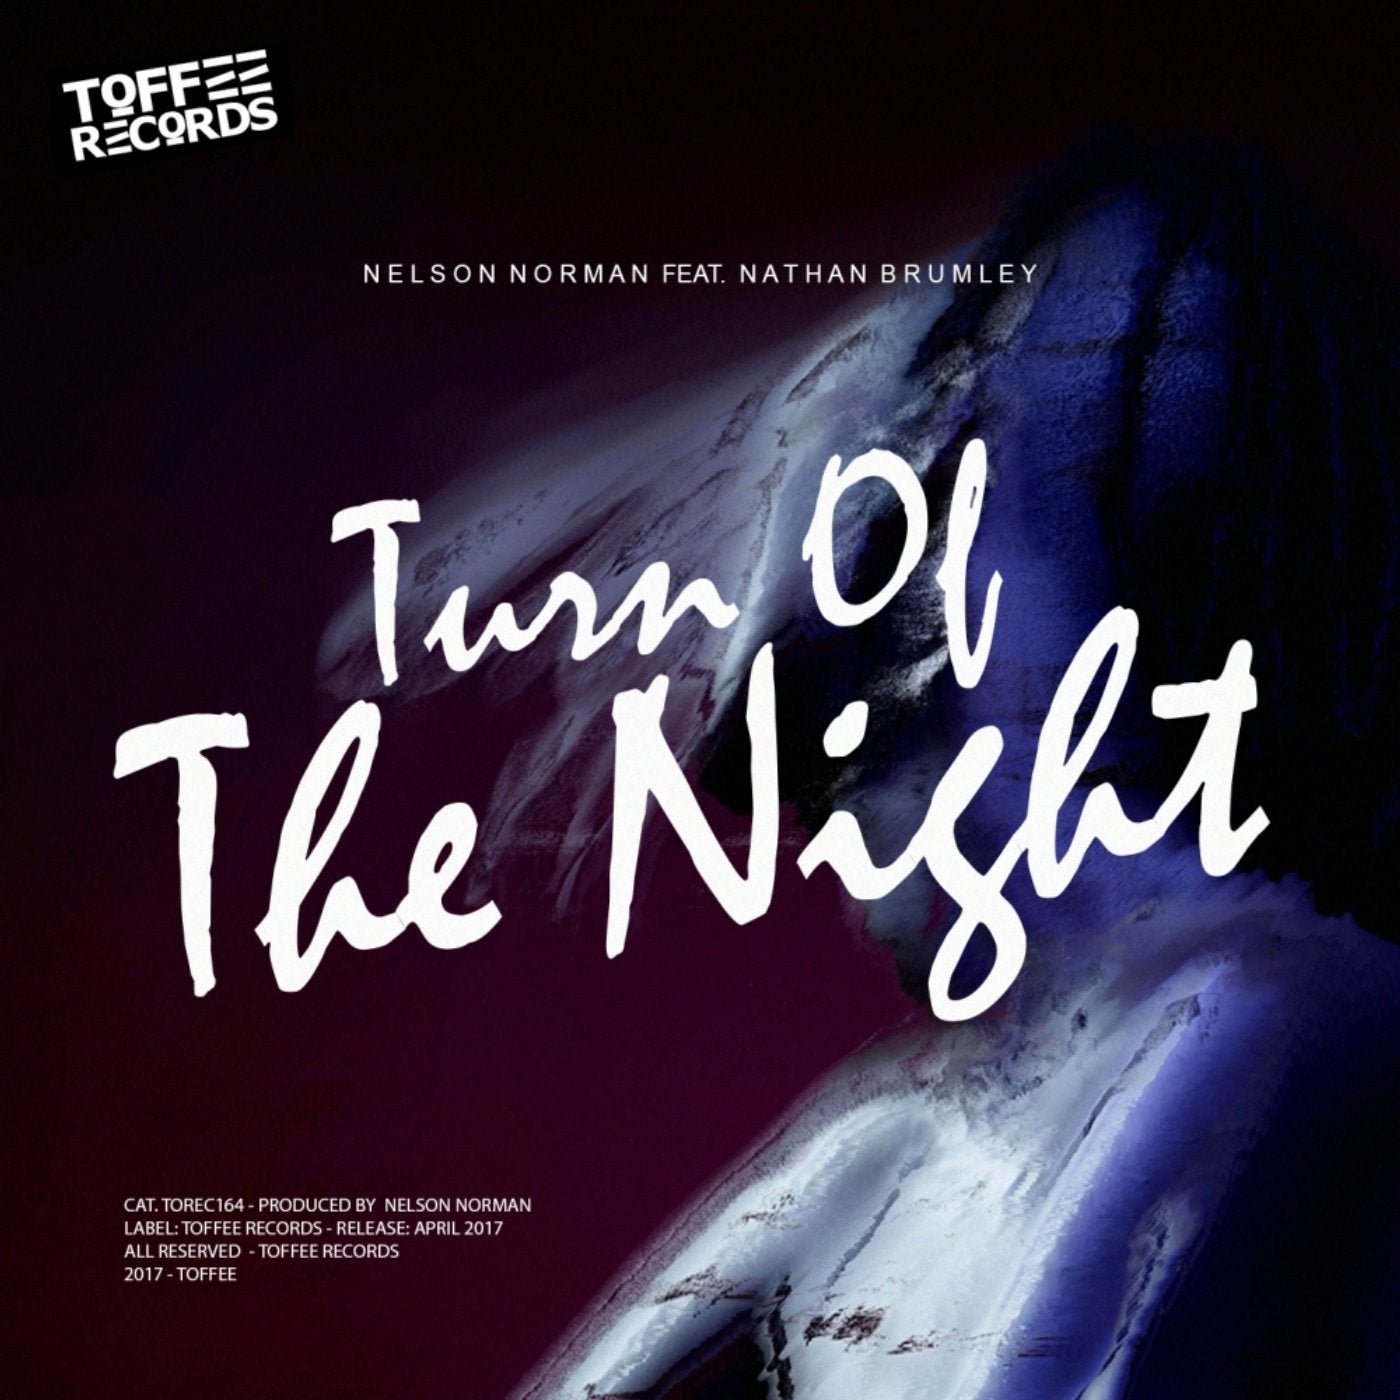 Turn Of The Night